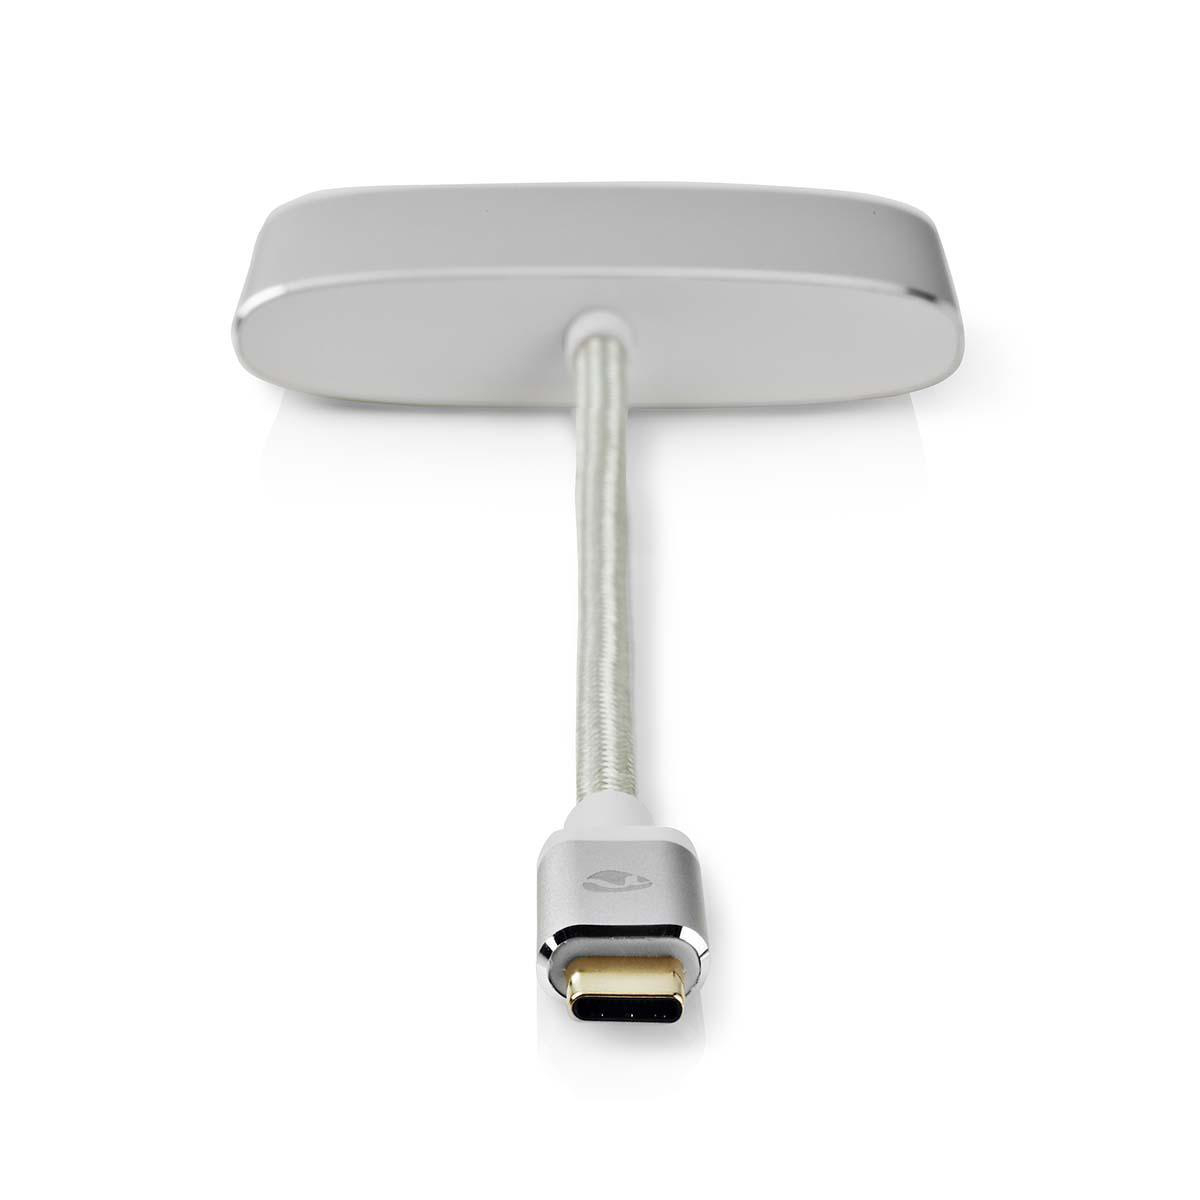 USB Multi-Port-Adapter CCTB64760AL02, NEDIS